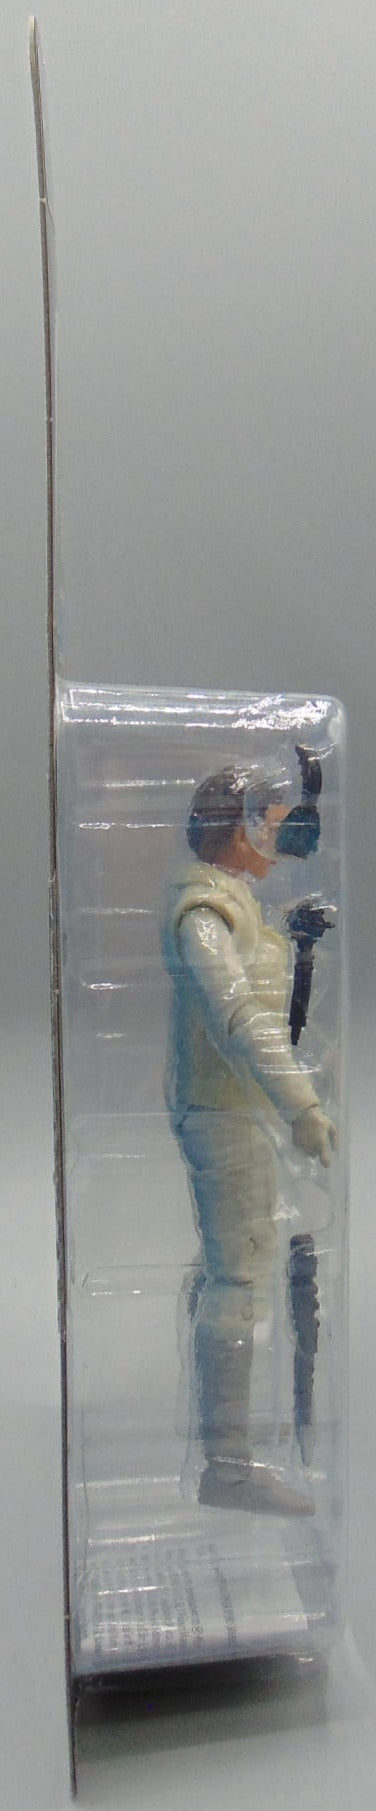 Princess Leia -Hoth- (40th Anni.)